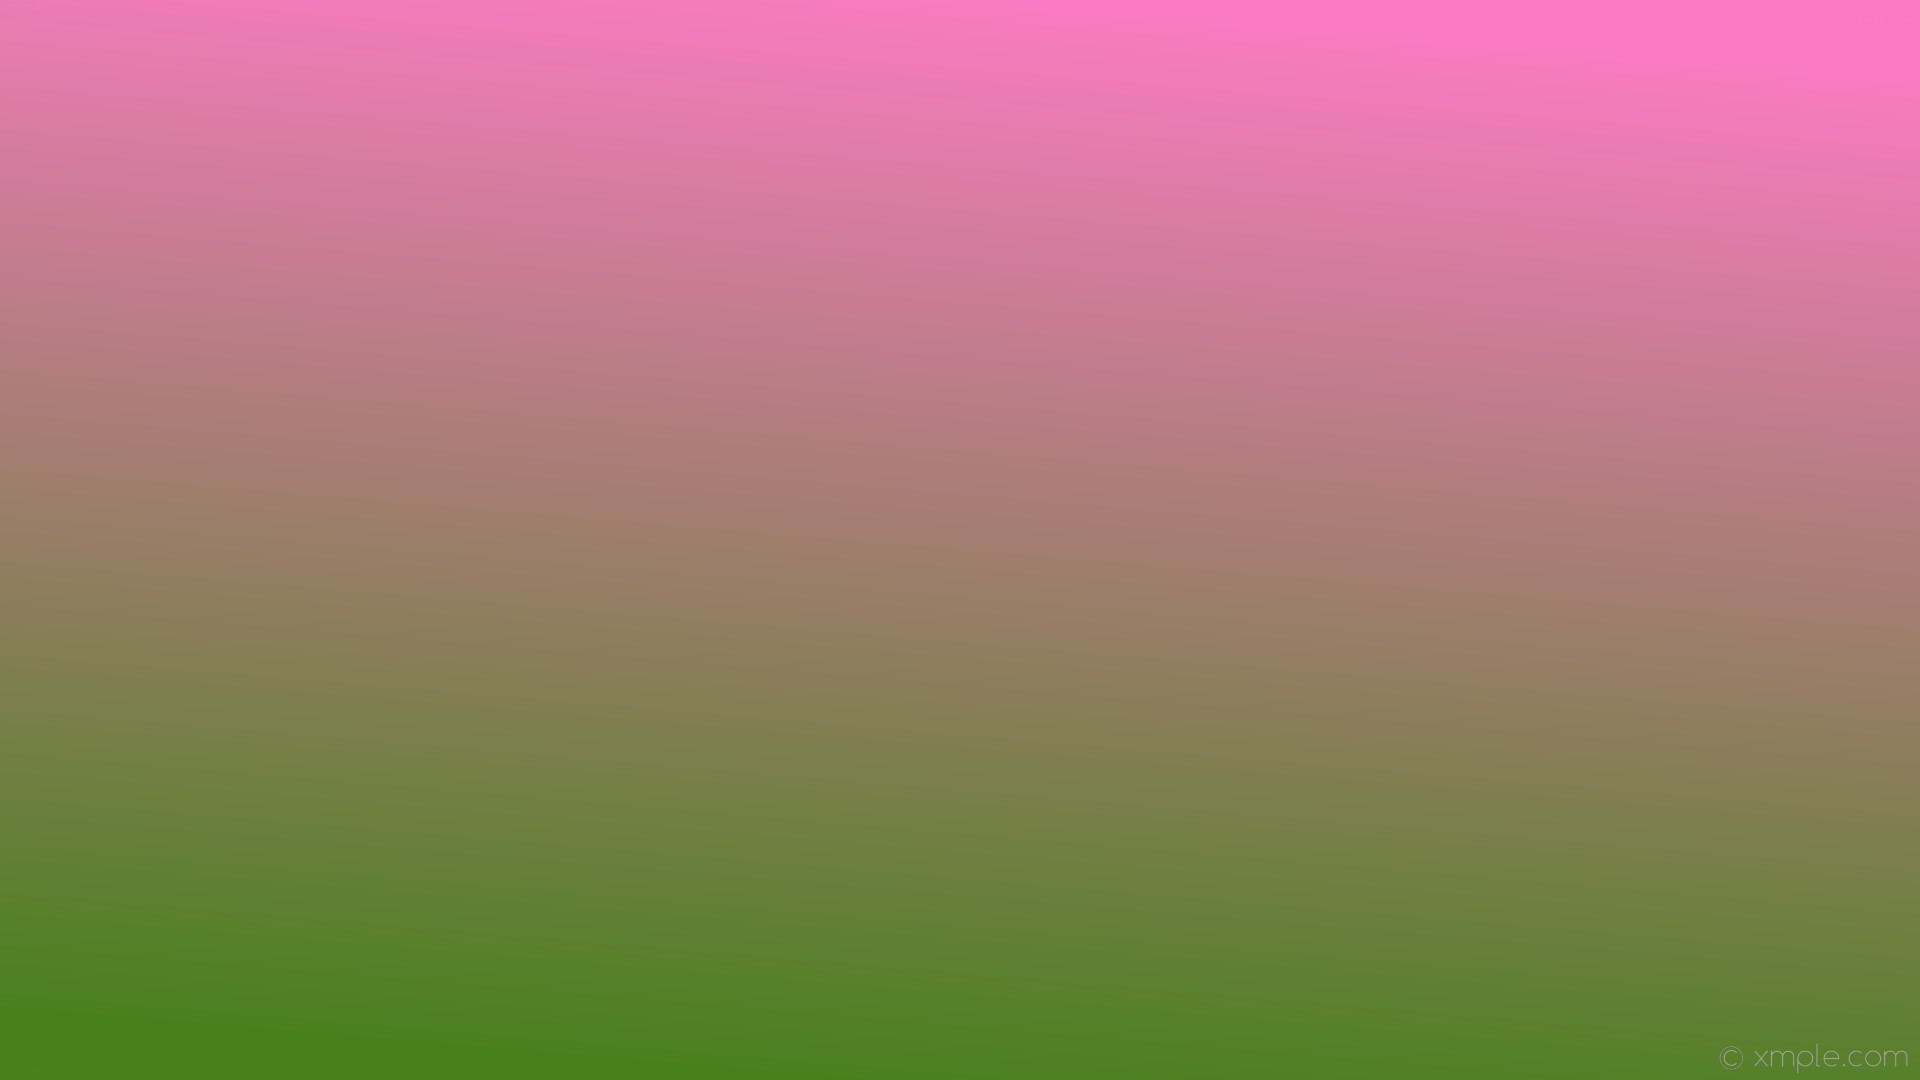 1920x1080 wallpaper pink lime linear gradient #49801e #fb7bc2 255Â°